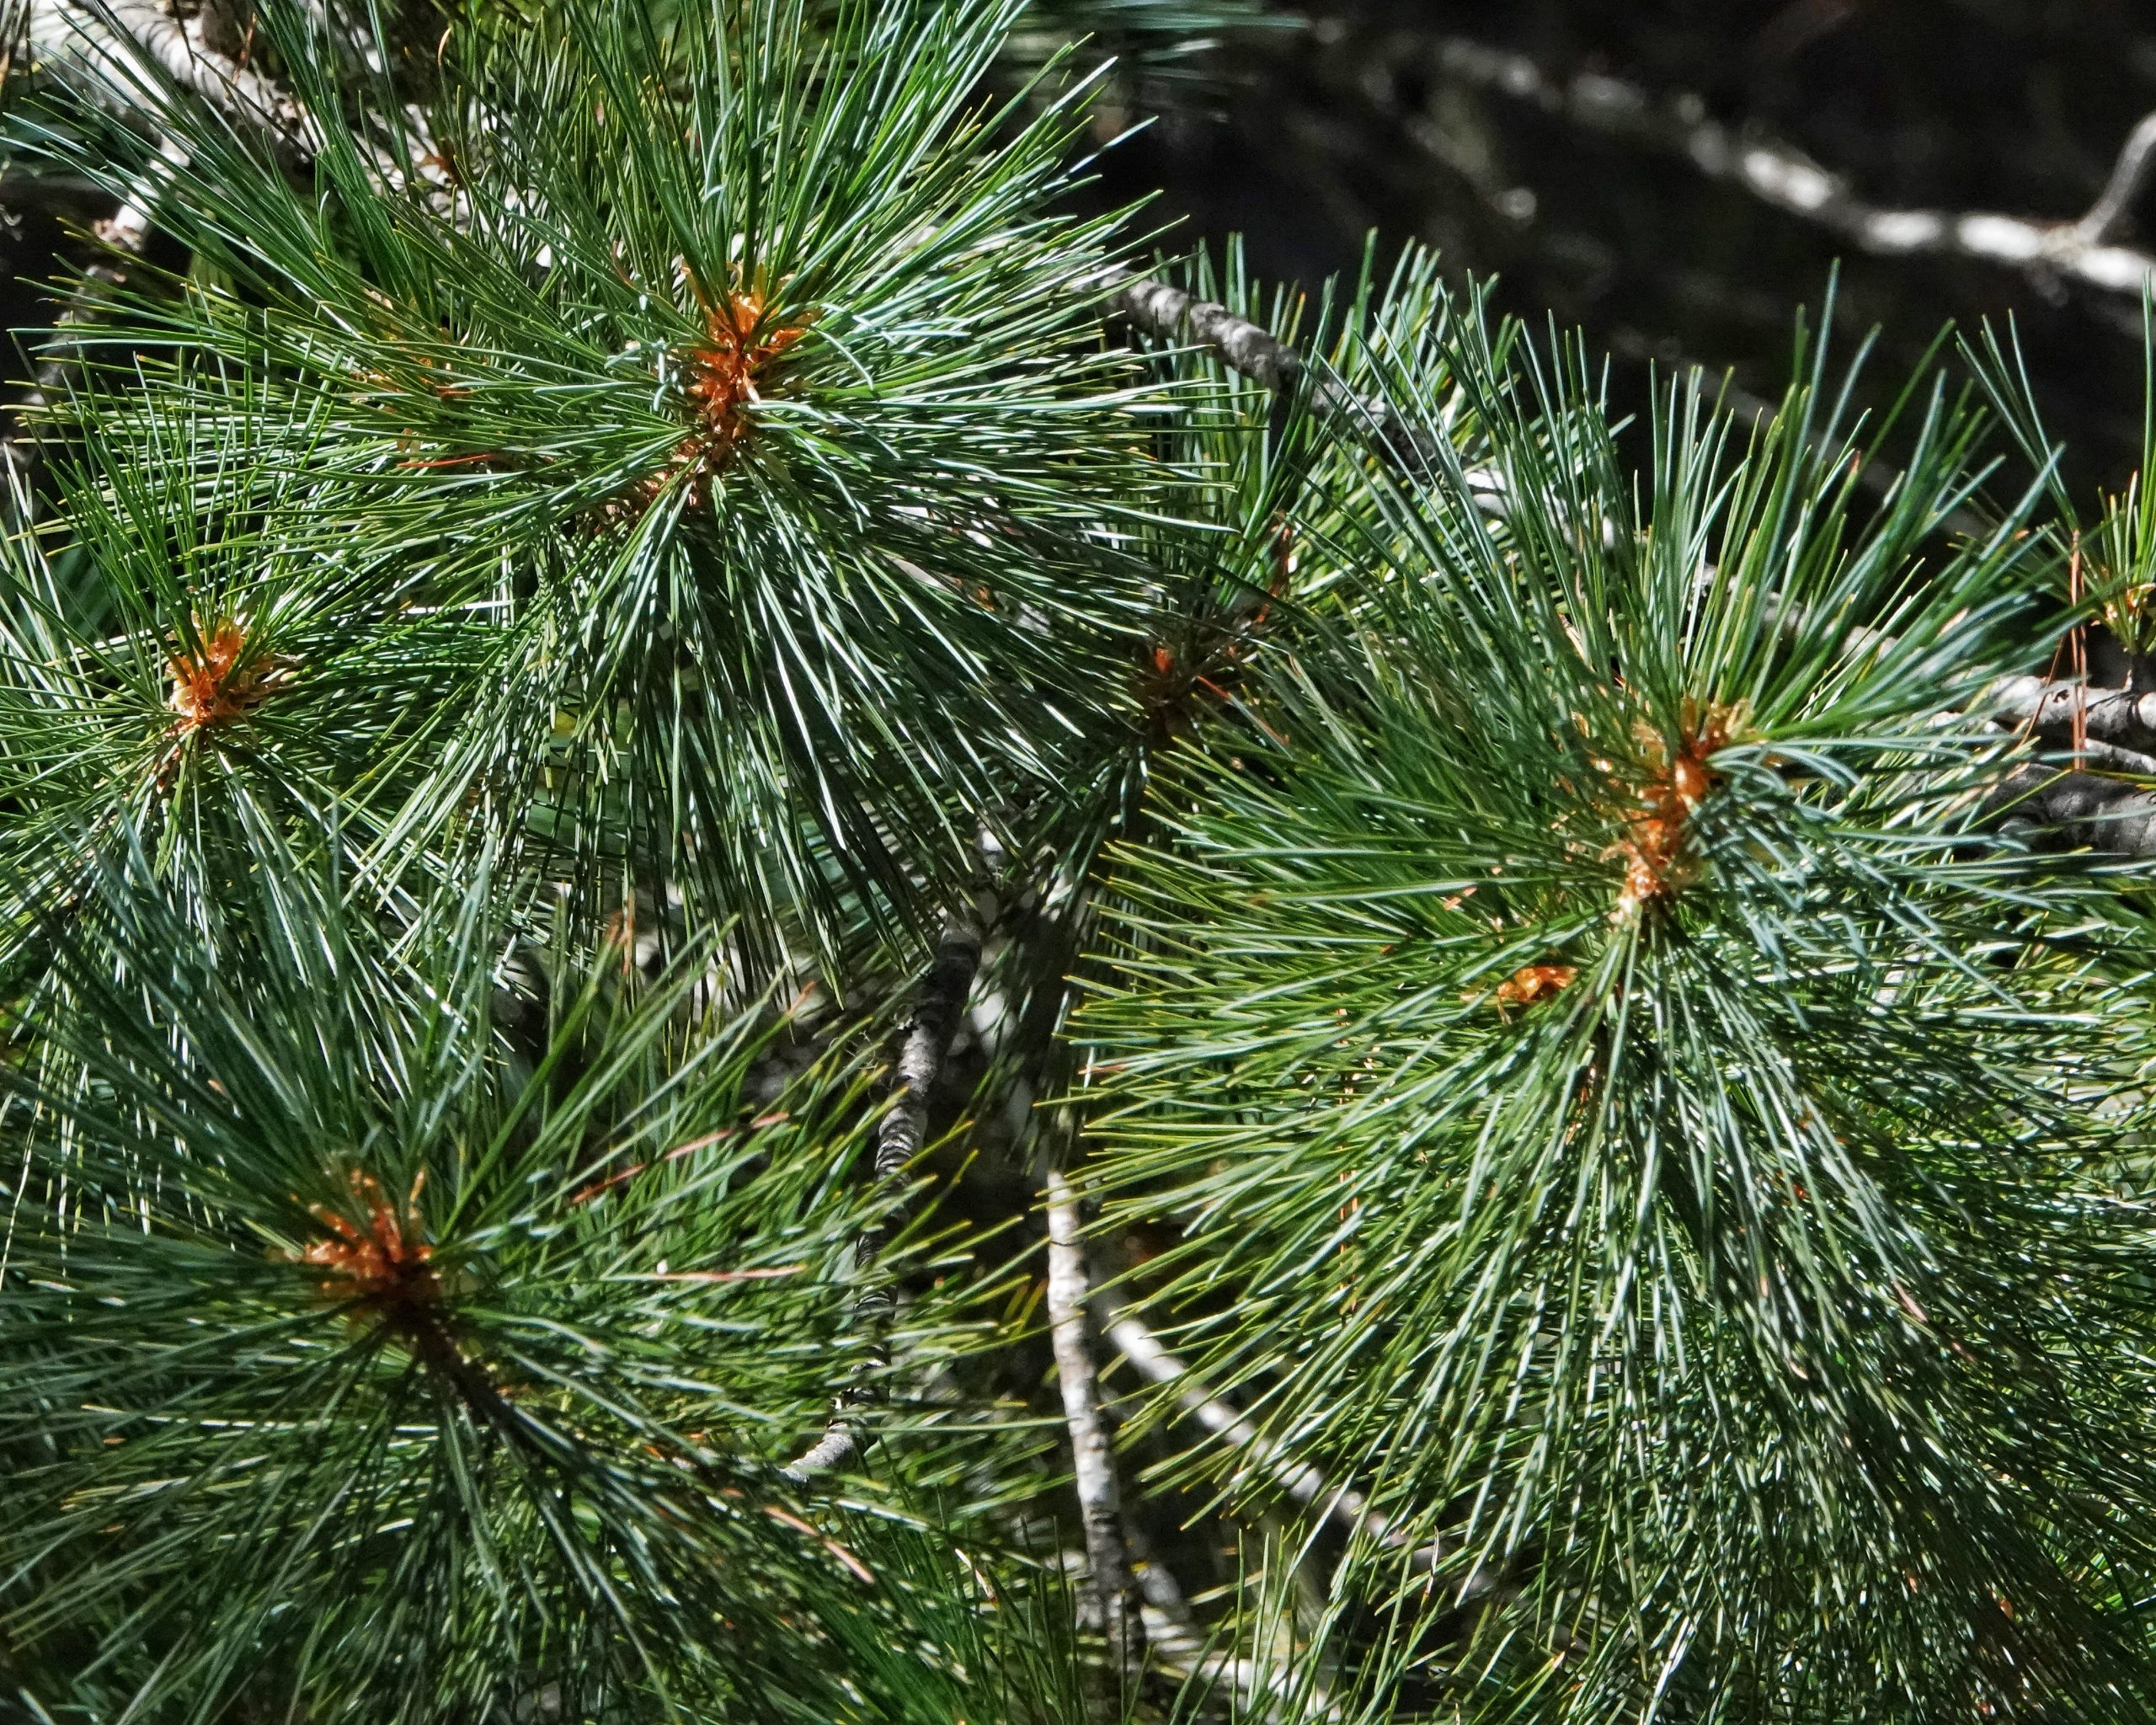 Western white pine (Pinus monticola) Flower, Leaf, Care, Uses - PictureThis